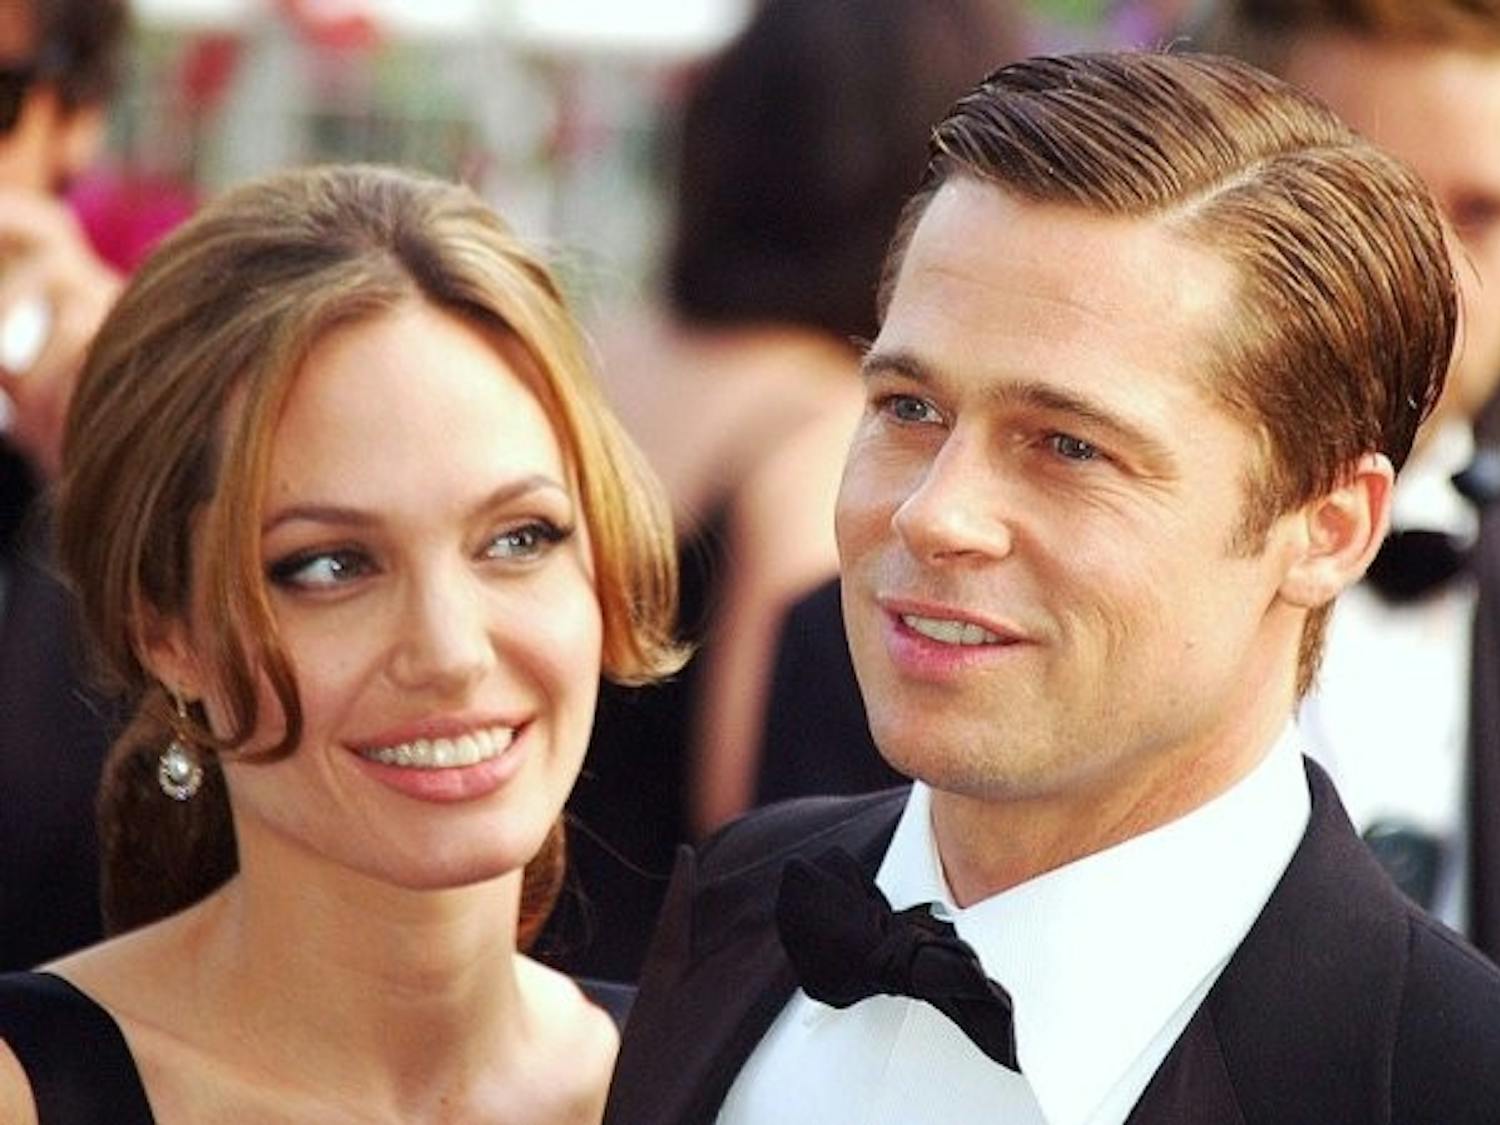 Brad Pitt and Angelina Jolie. Photo taken from Wikipedia.